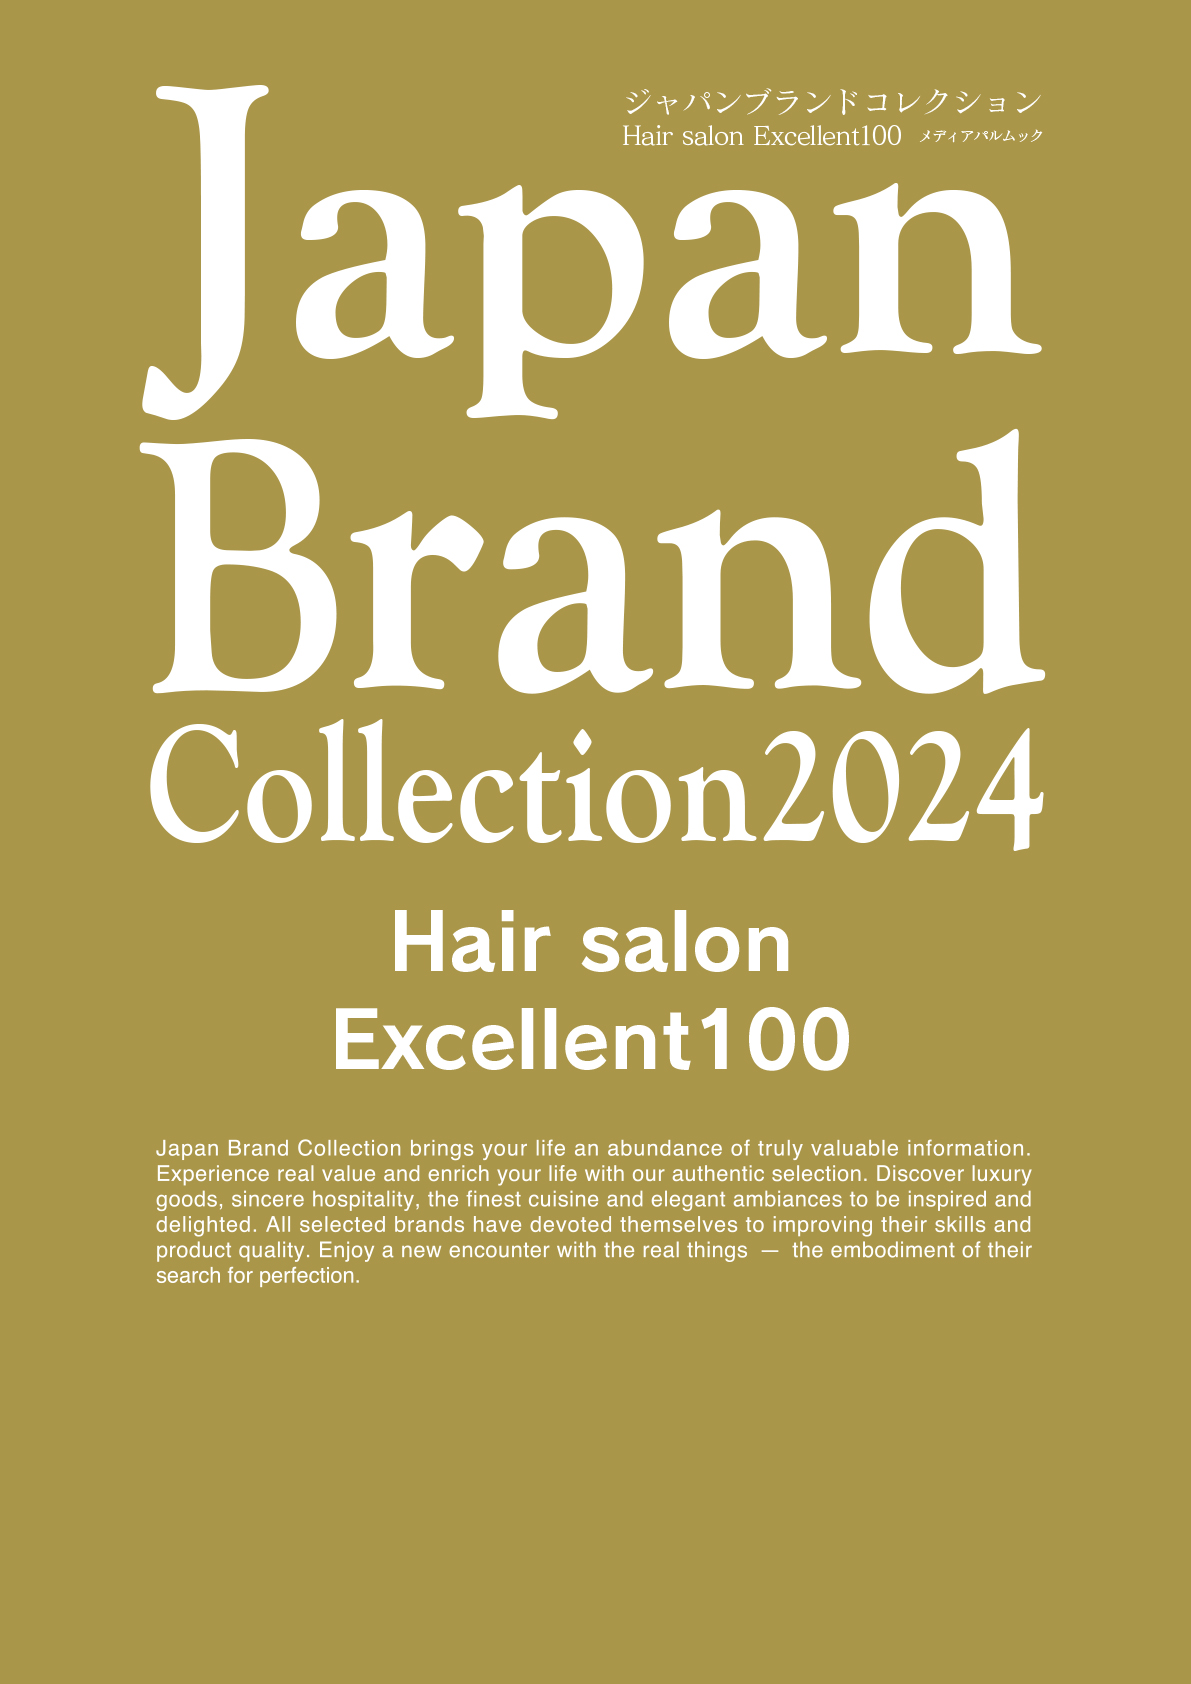 Japan Brand Collection2024 Hair Salon Excellent100